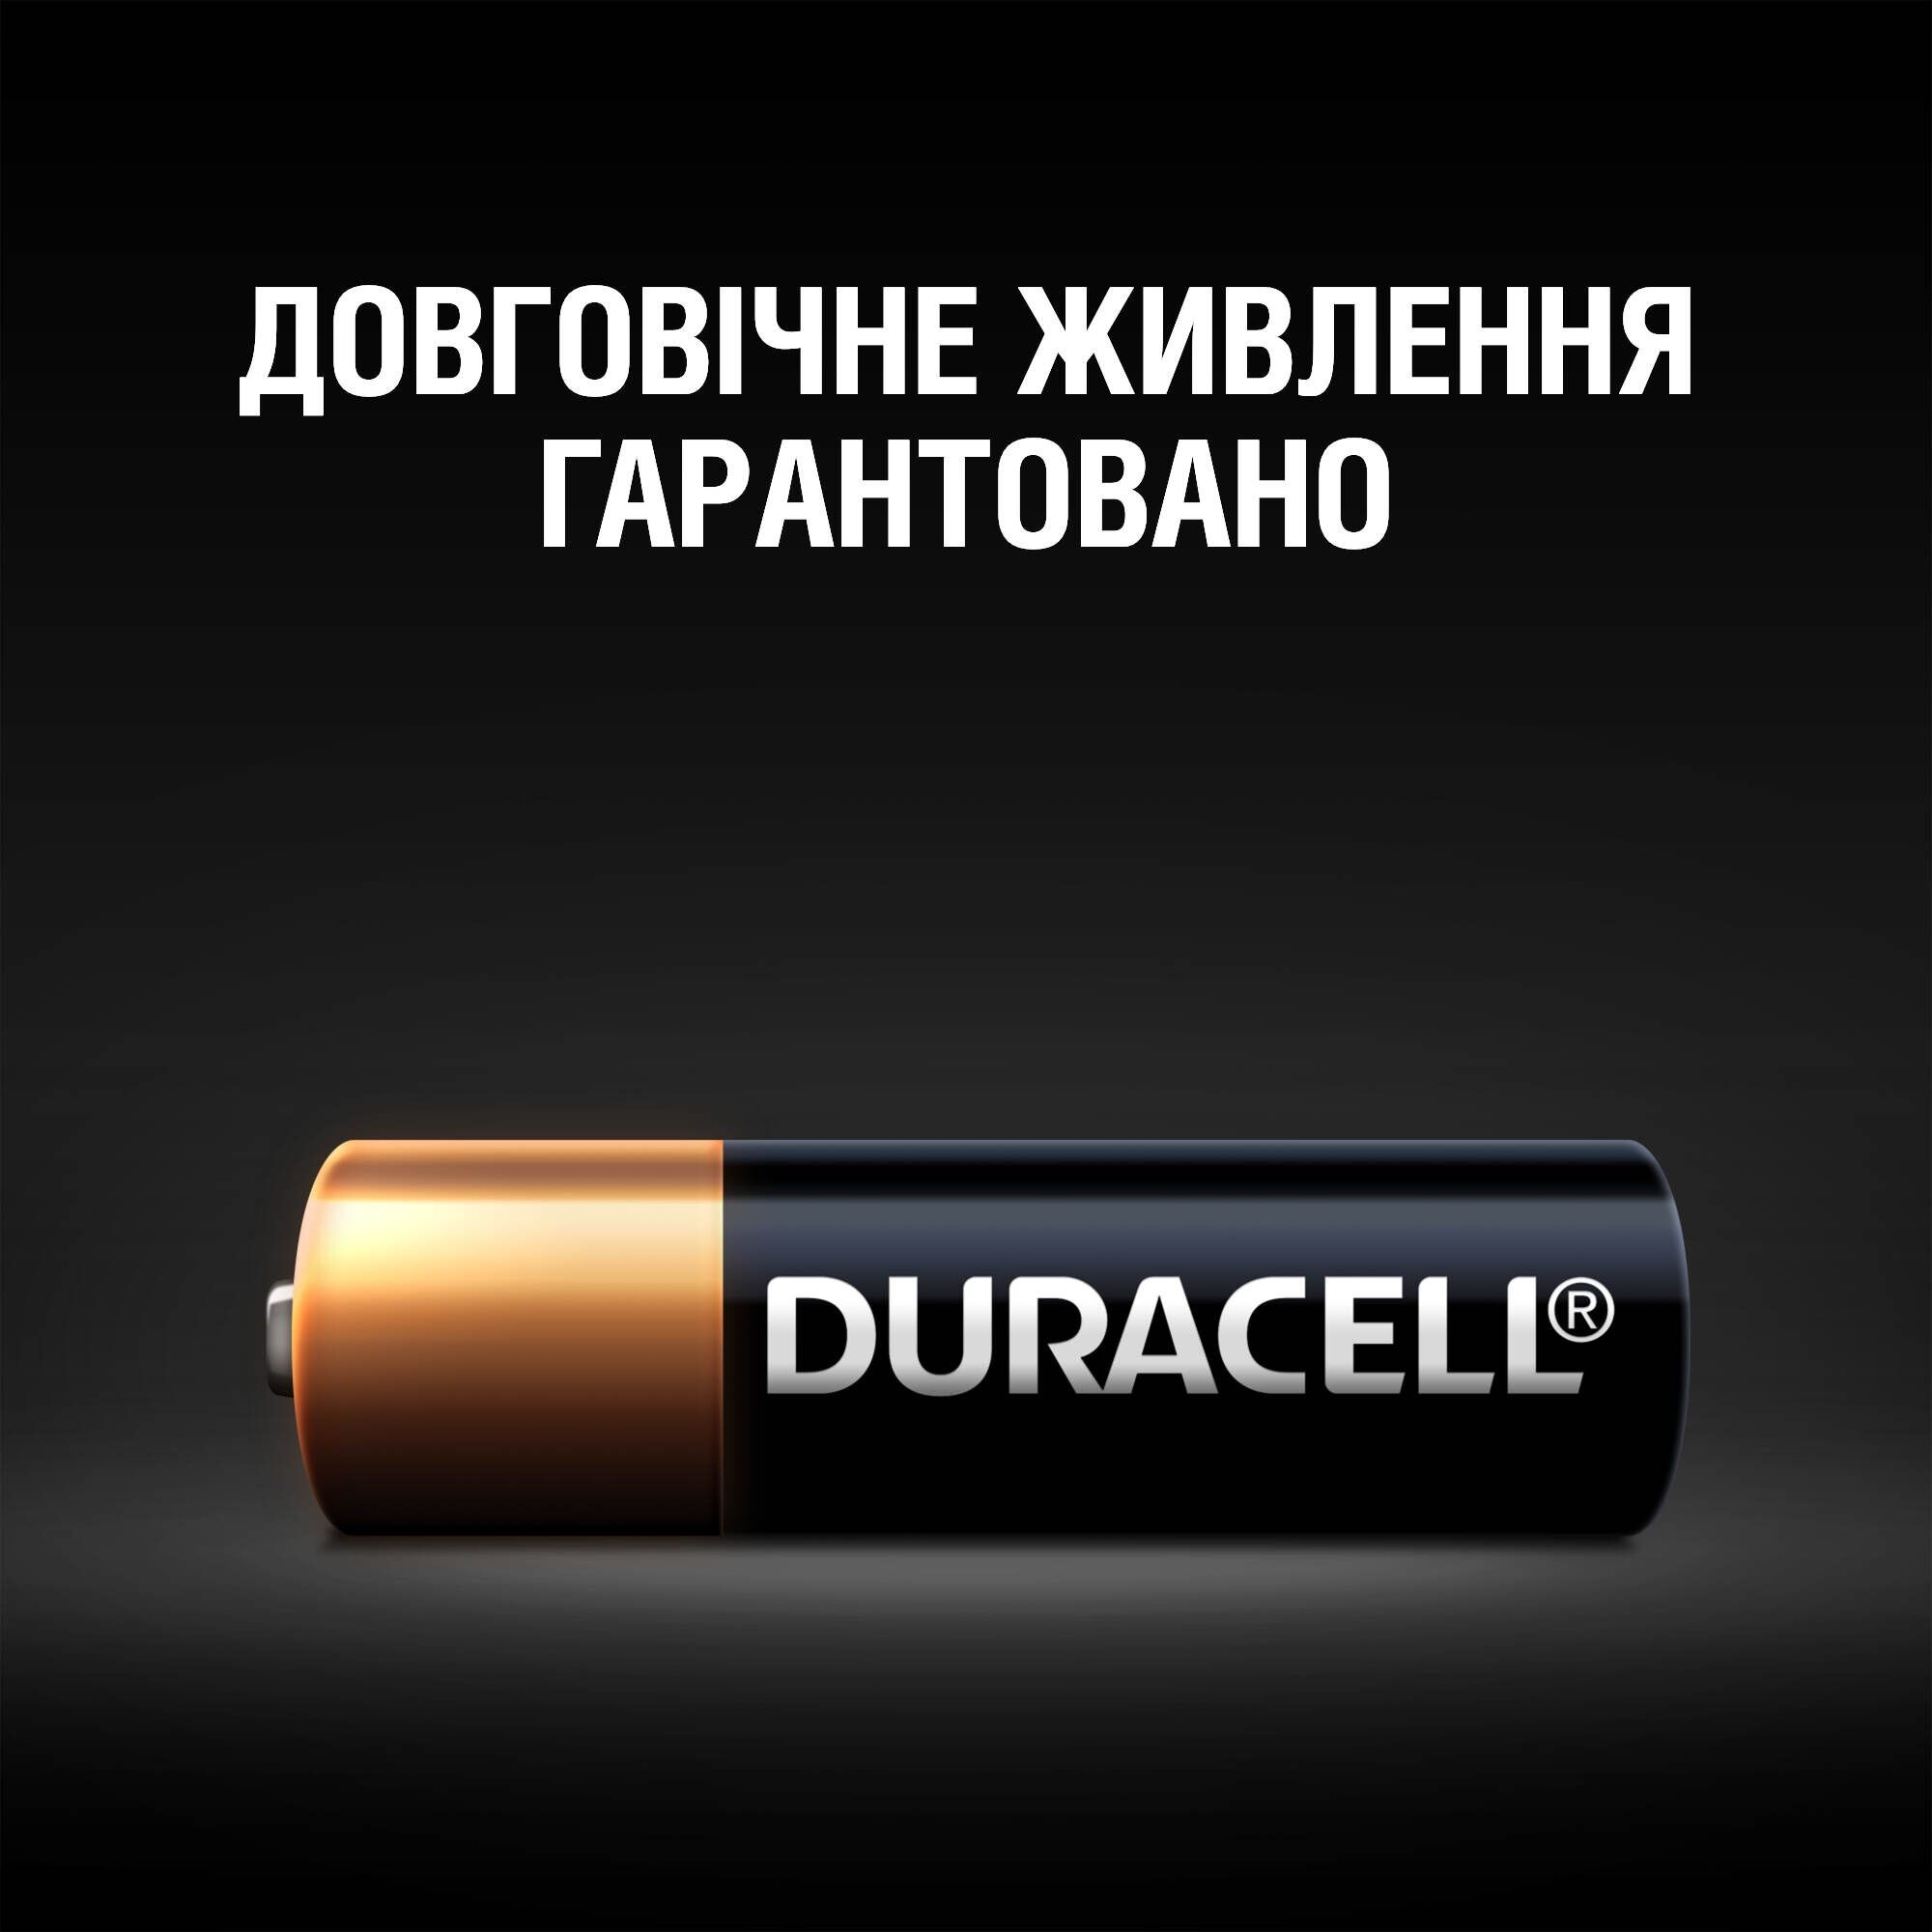 продаём Duracell MN27 / A27 (5007388) в Украине - фото 4